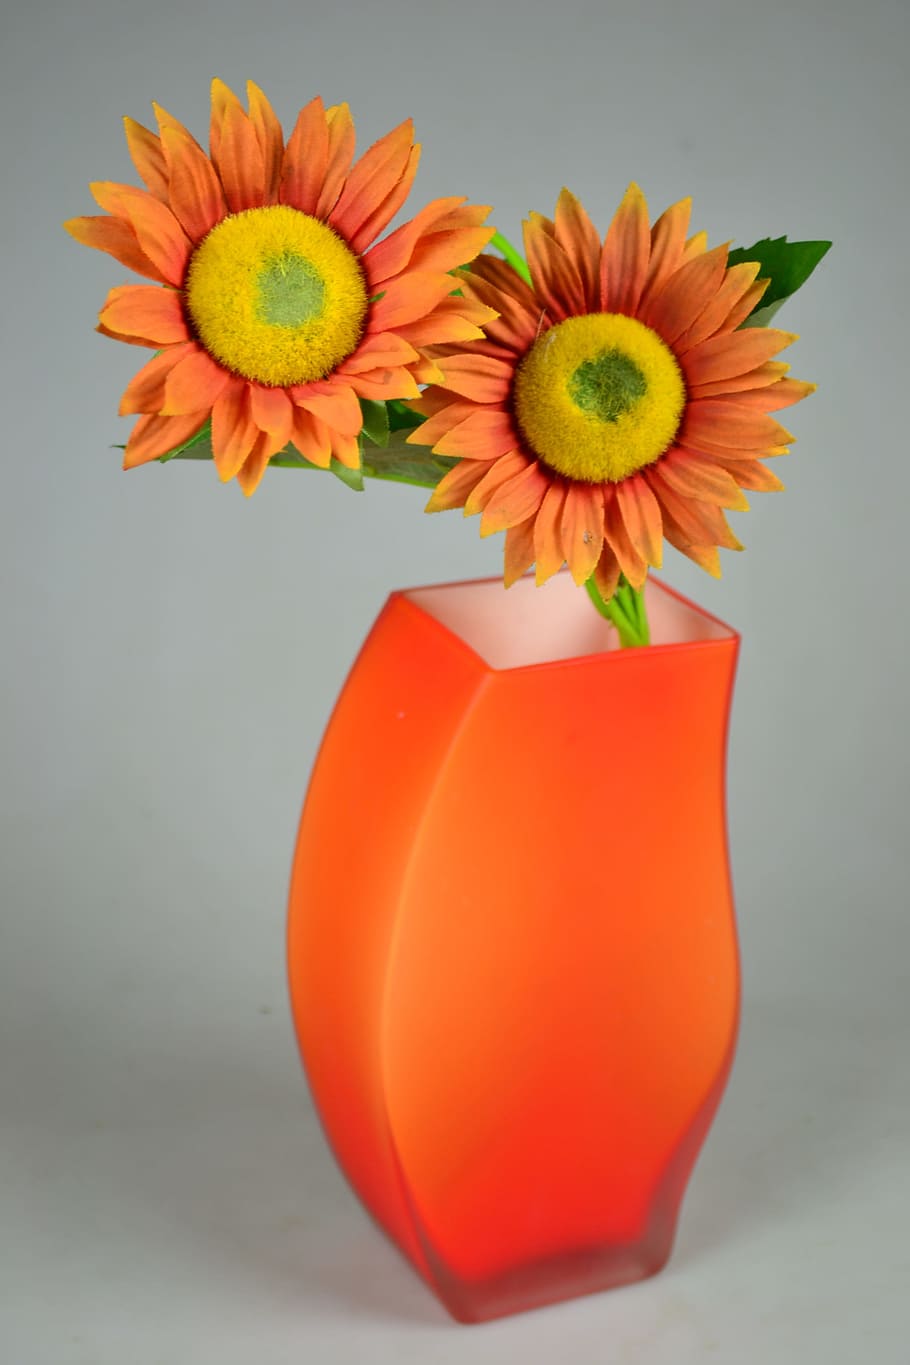 Sunflower, Orange, Warm, Vase, nature morte, still life, yellow, flower, nature, gerbera Daisy